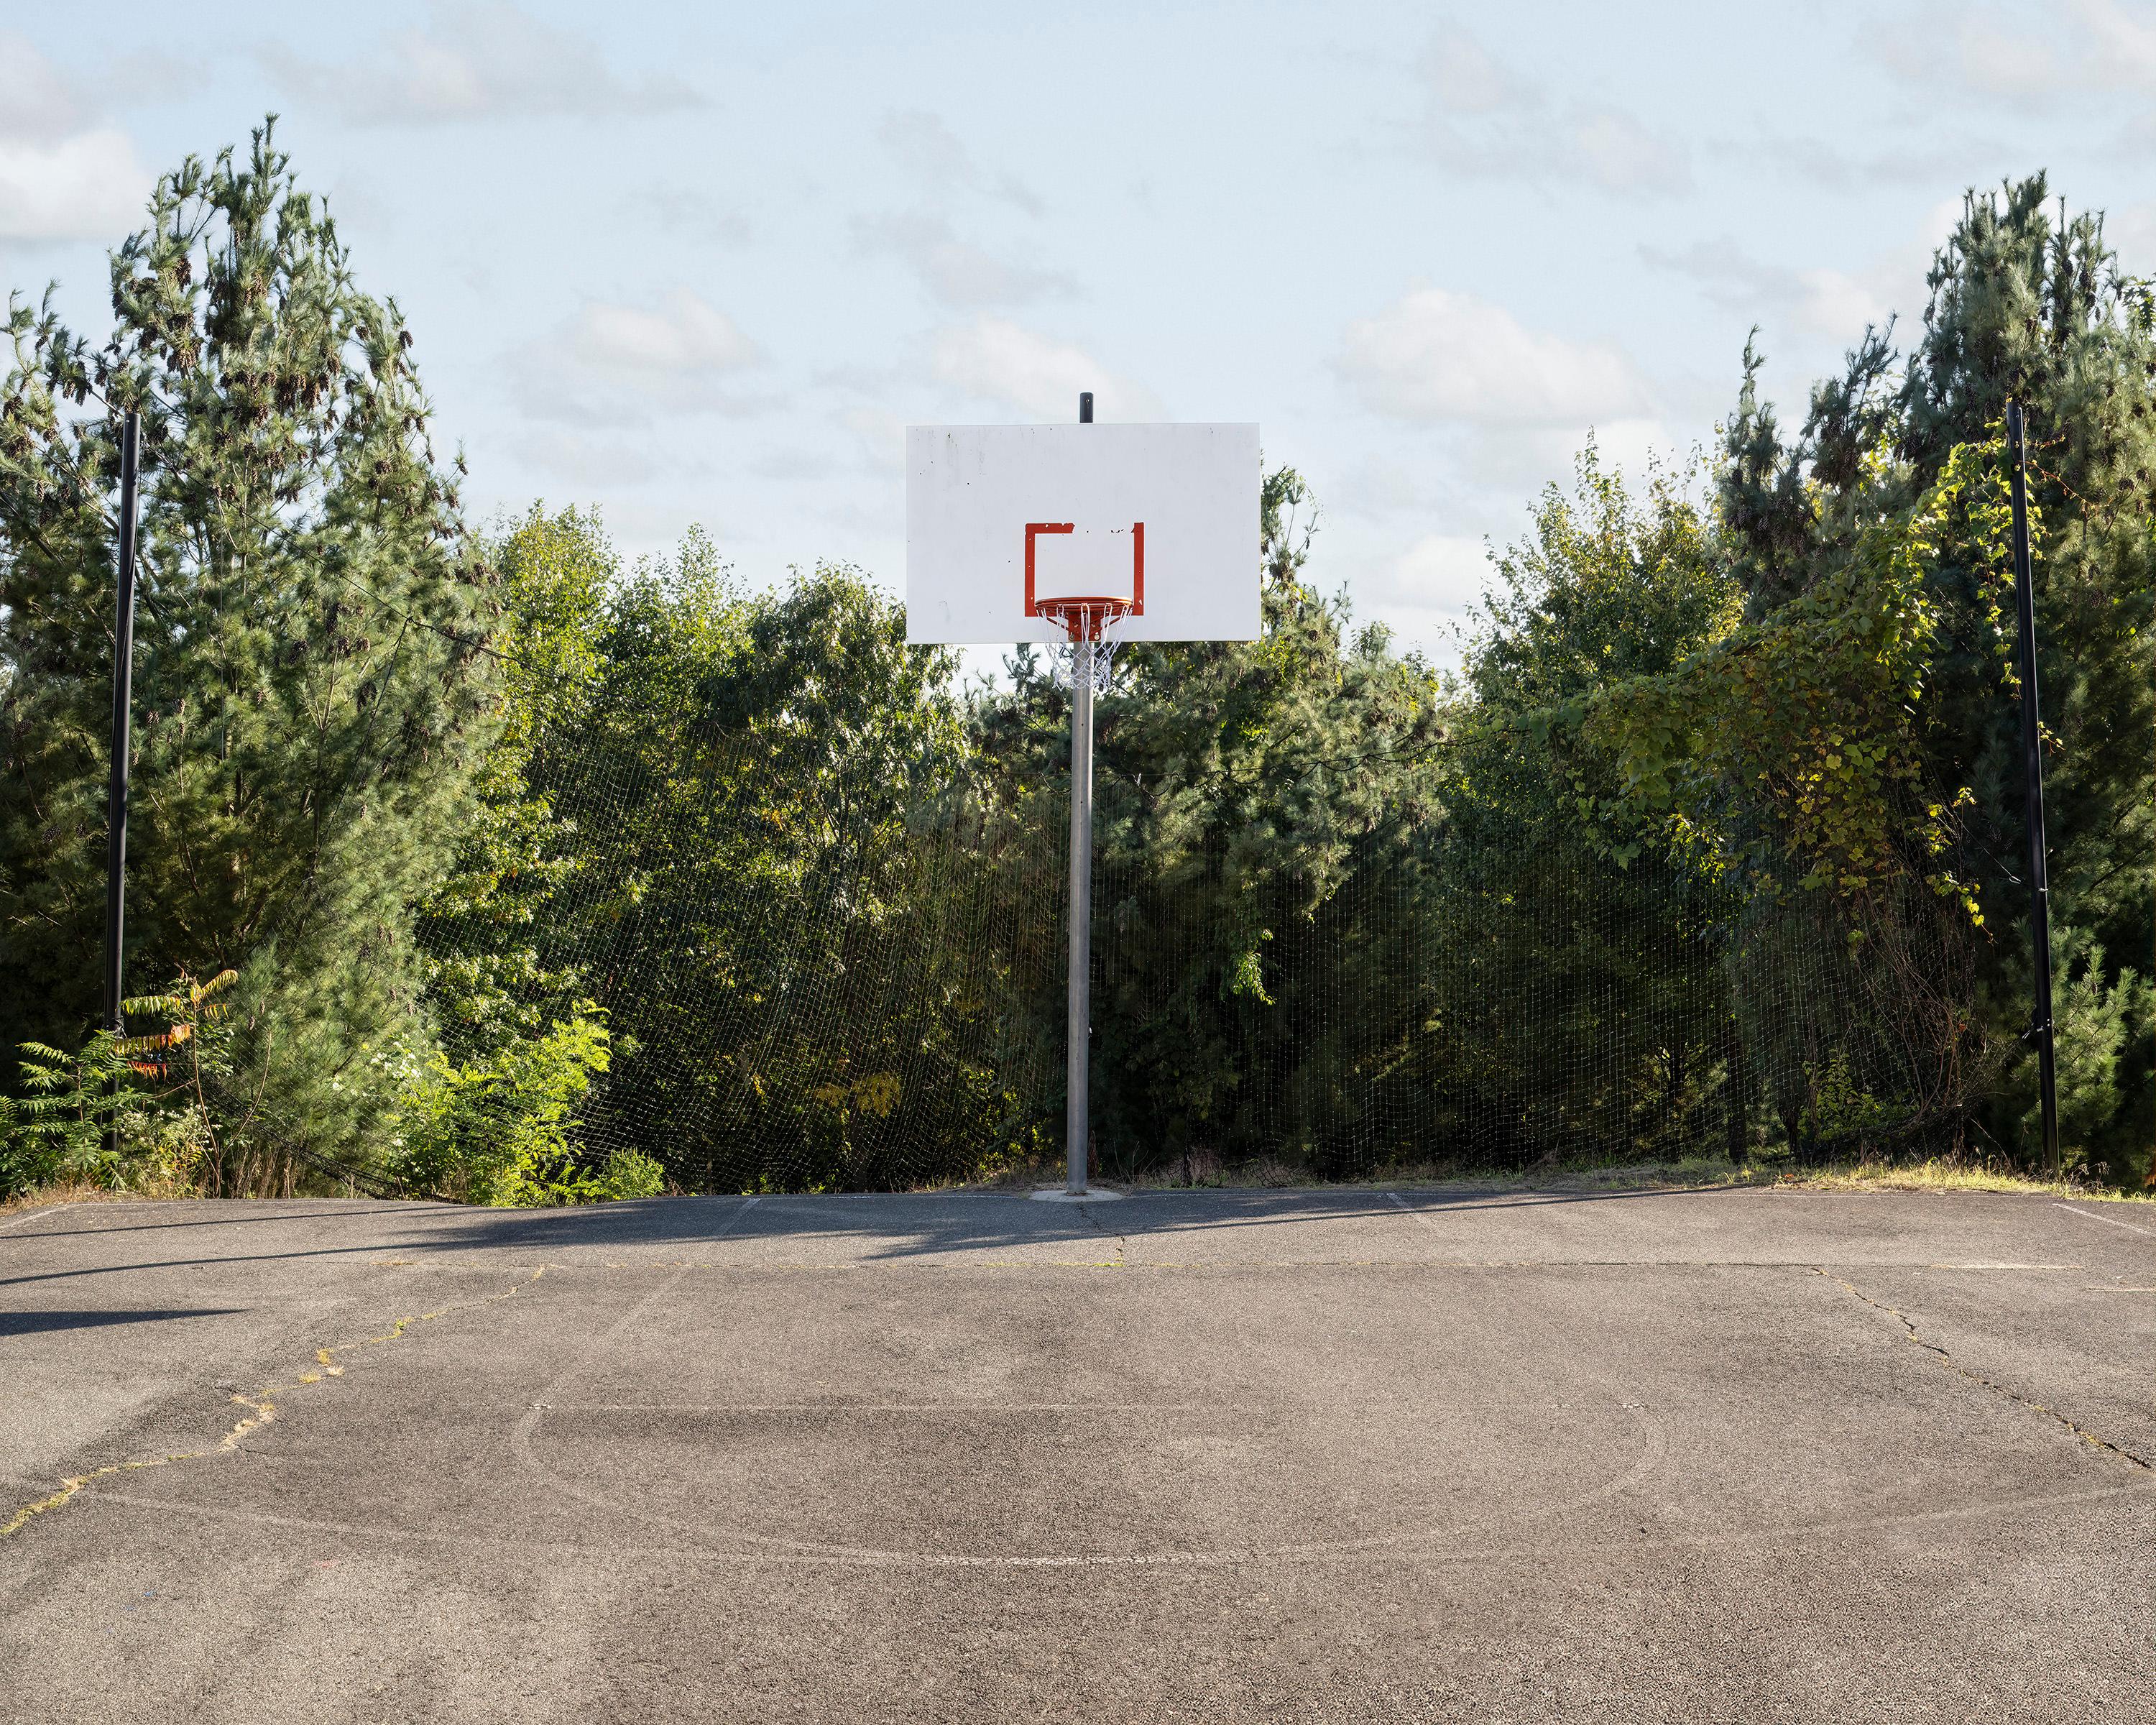 Landscape Photograph Sean Hemmerle - Photographie de court de basket-ball HOOPS, Springfield College, Springfield, MA, États-Unis